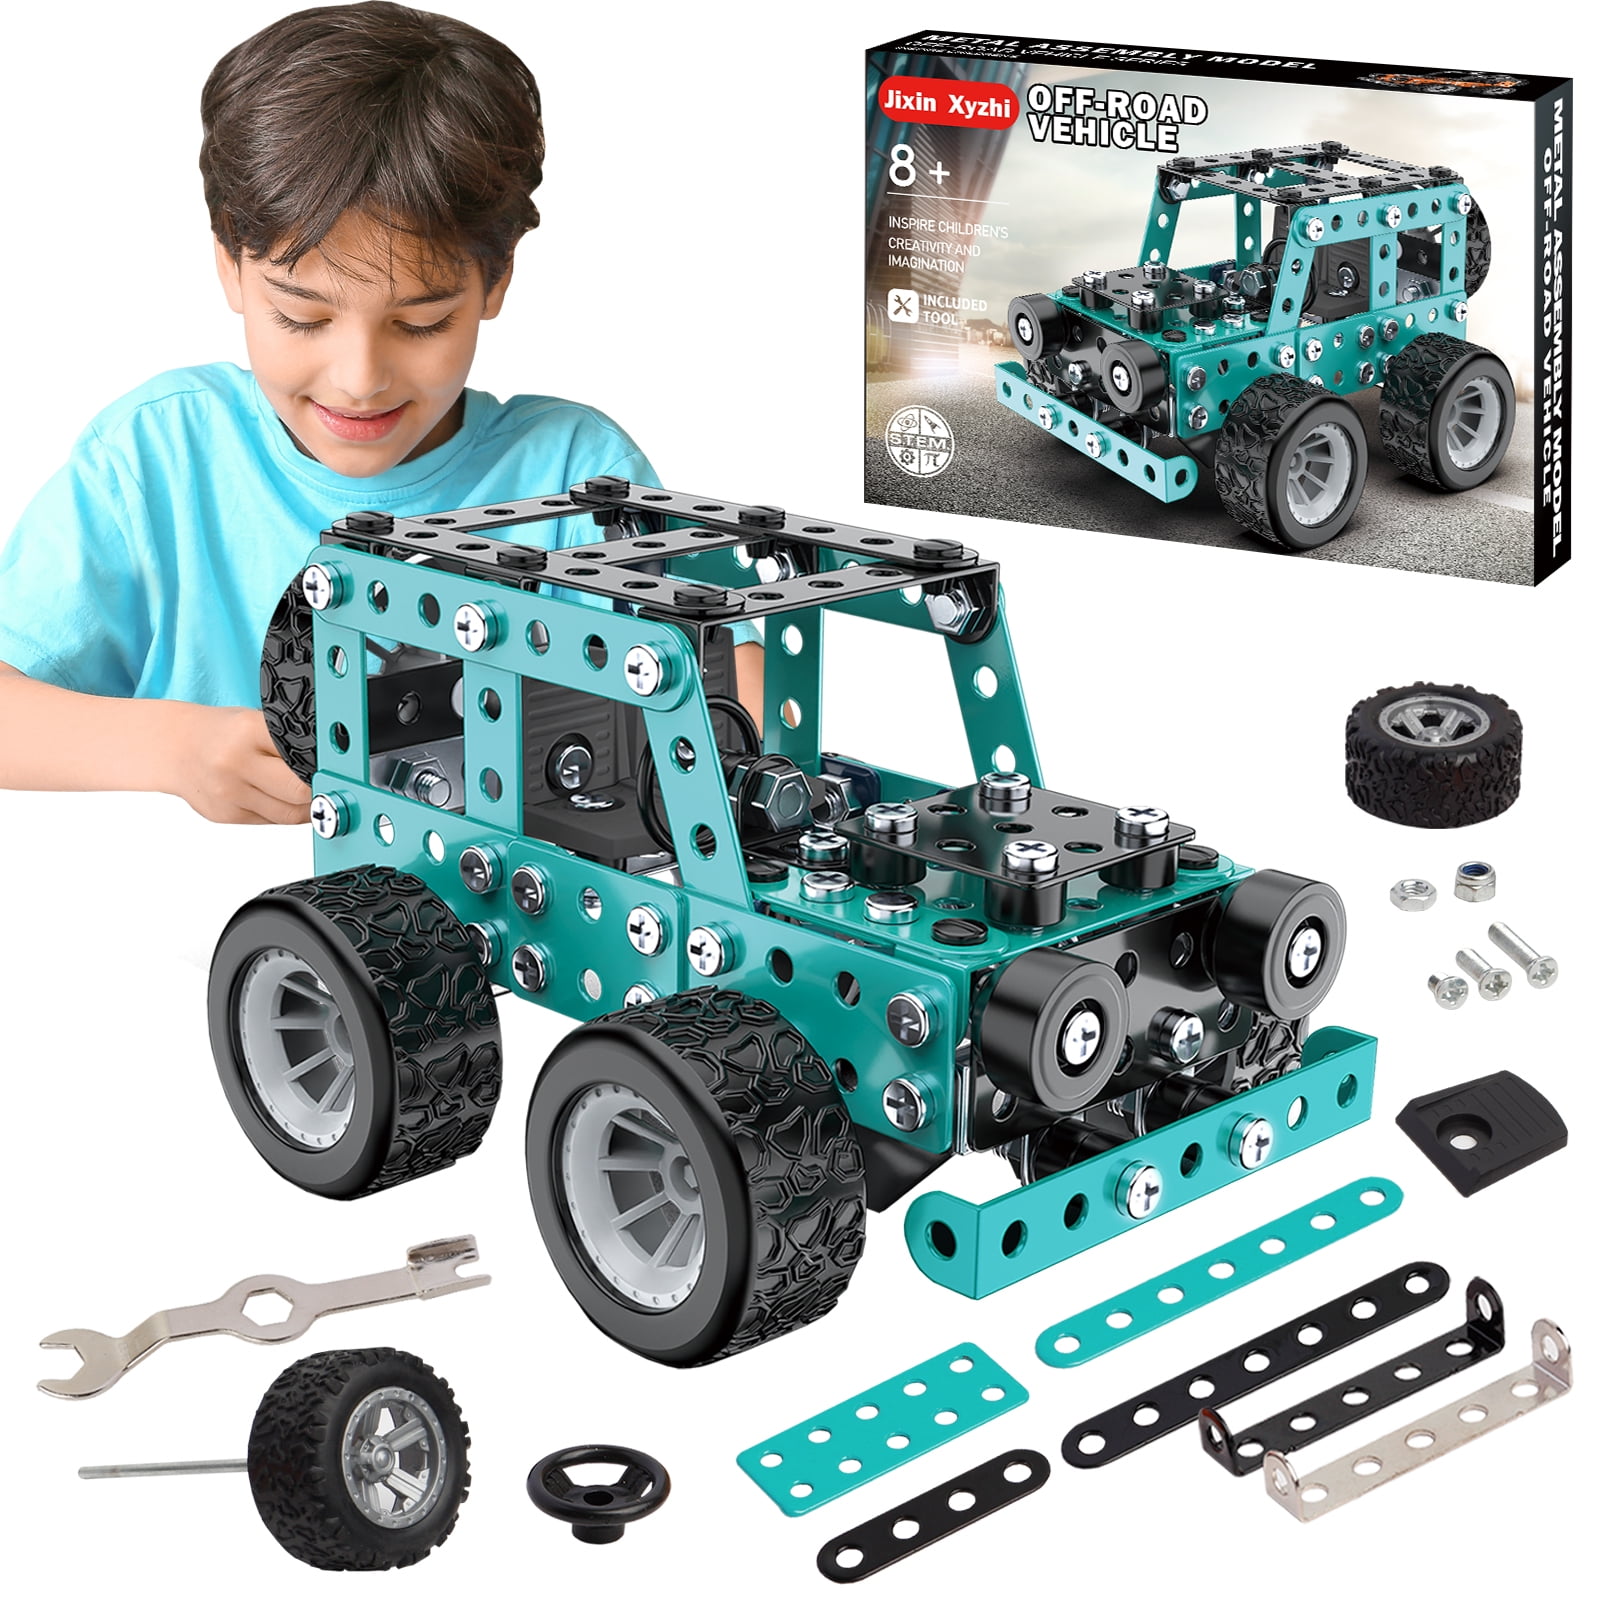 LEGO Technic 42122 Jeep Wrangler Rubicon offiziell vorgestellt